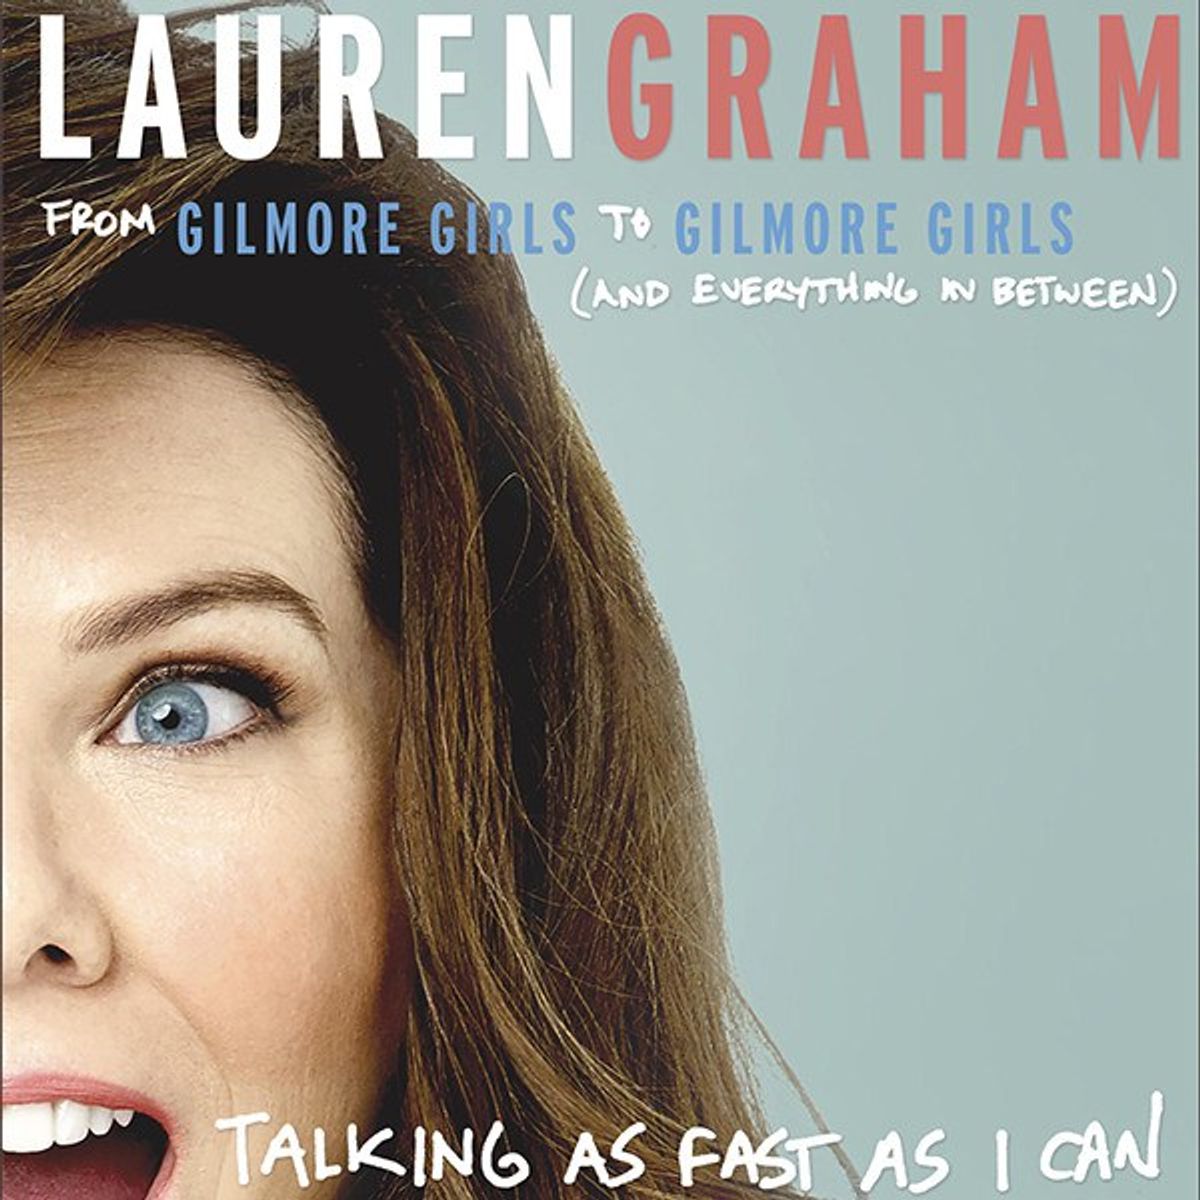 A Review of Lauren Graham's Memoir "Talking As Fast As I Can"